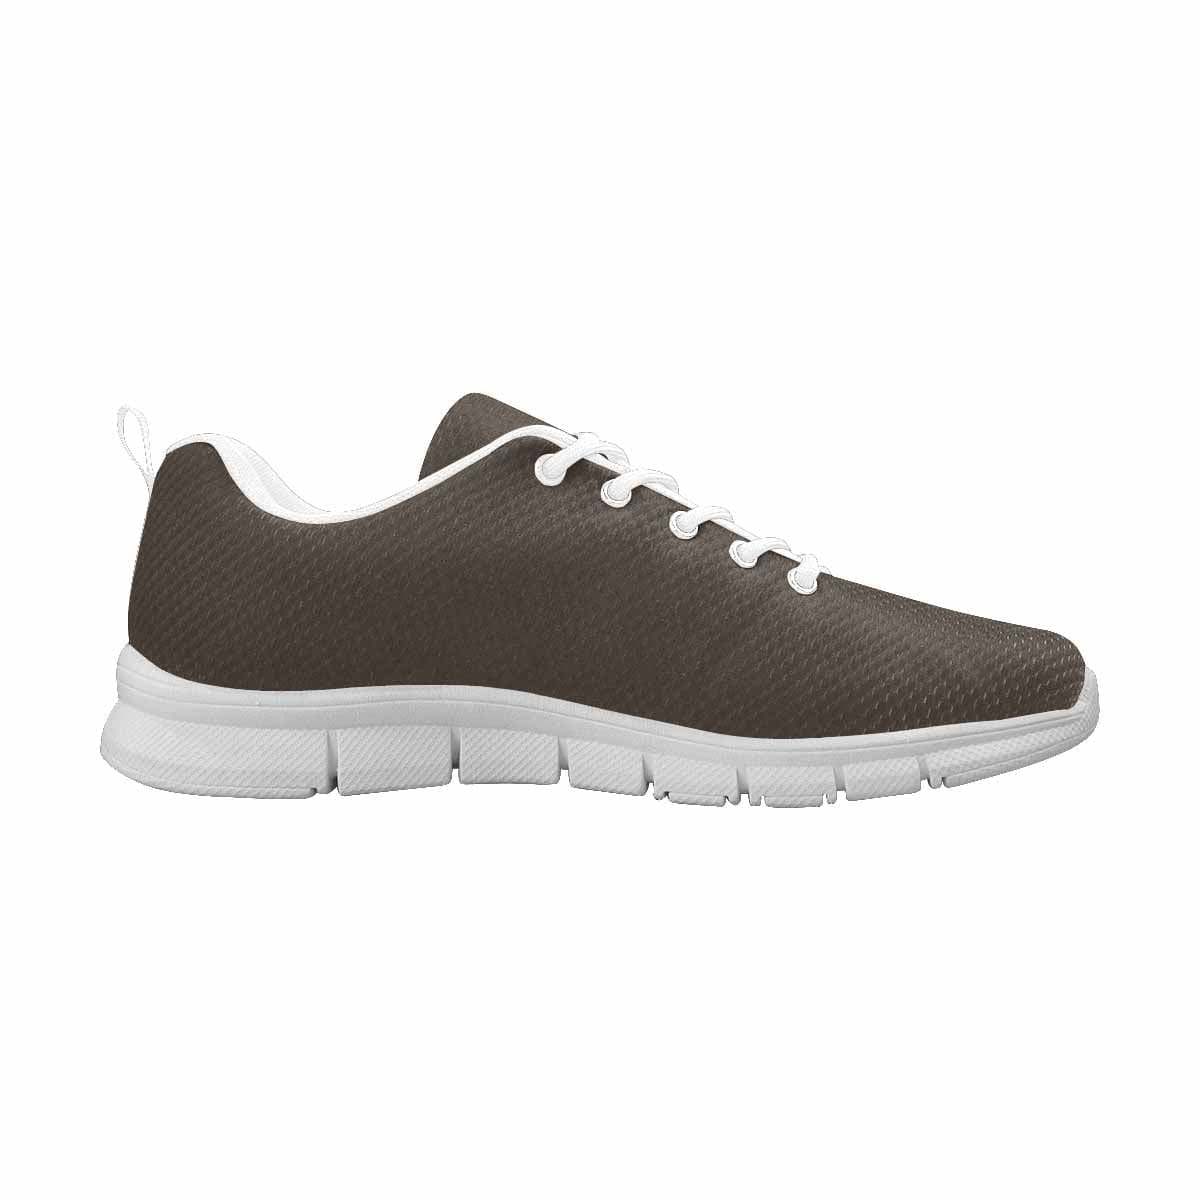 Sneakers For Men Dark Taupe Brown - Running Shoes - Mens | Sneakers | Running